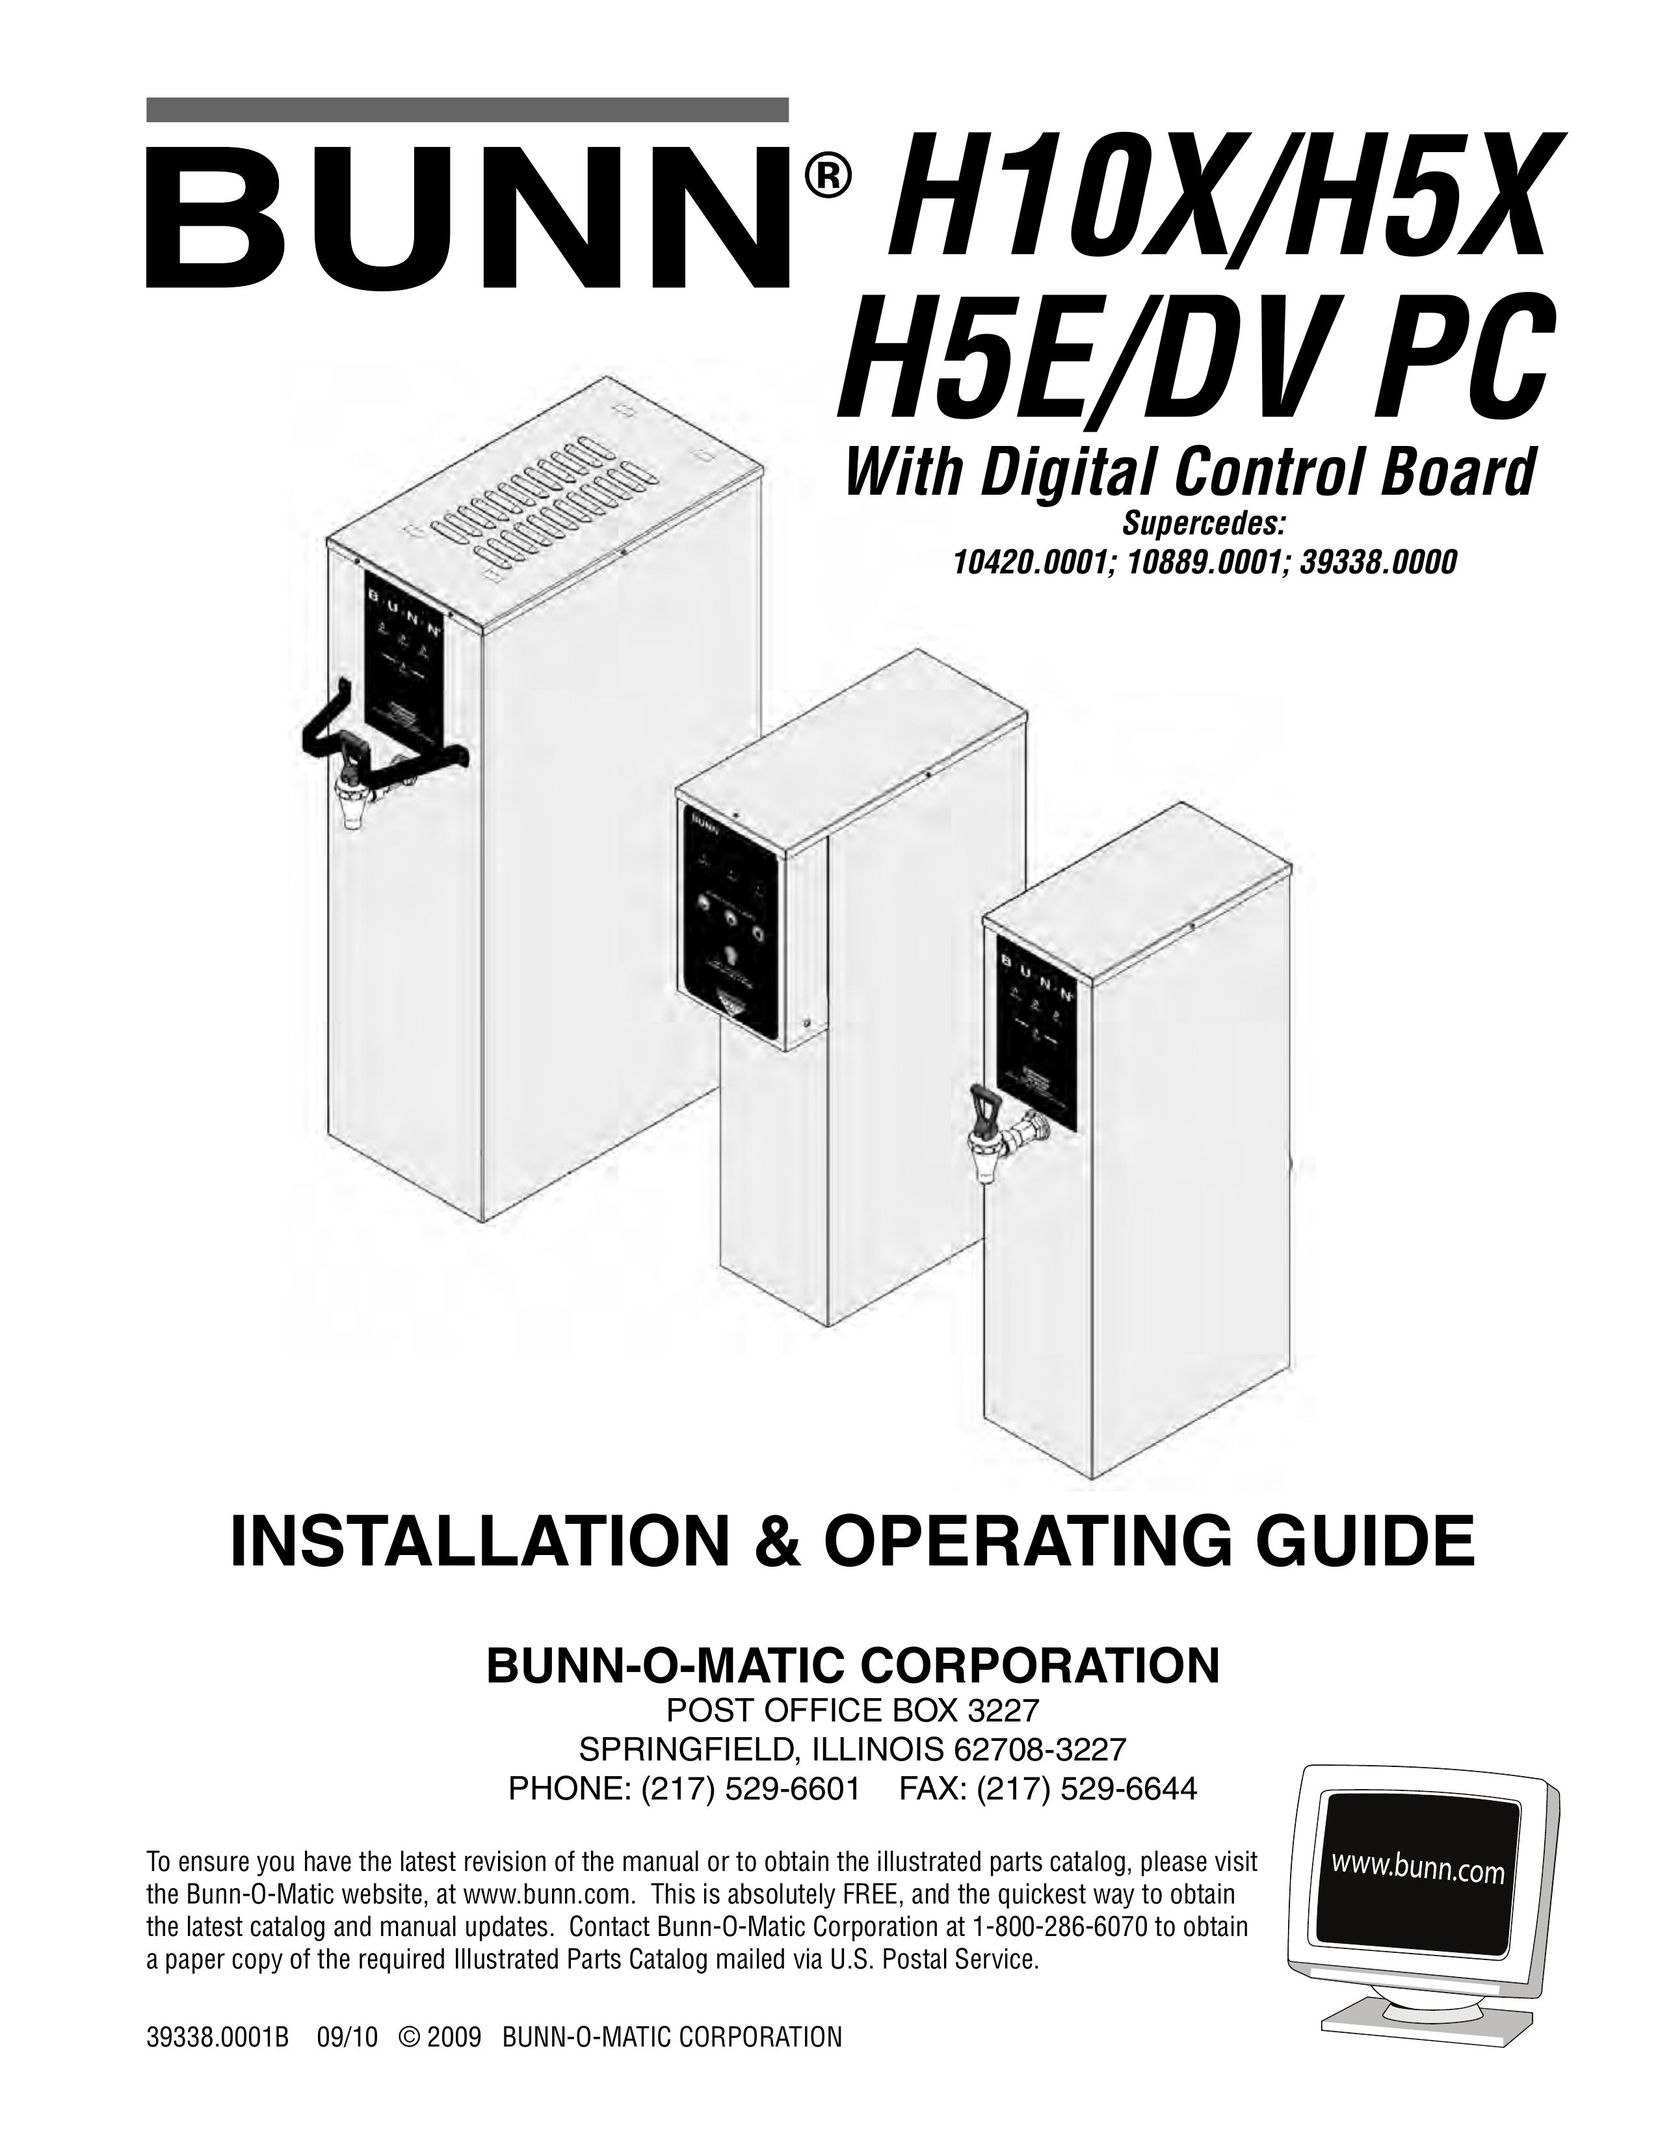 Bunn DV PC Water Heater User Manual